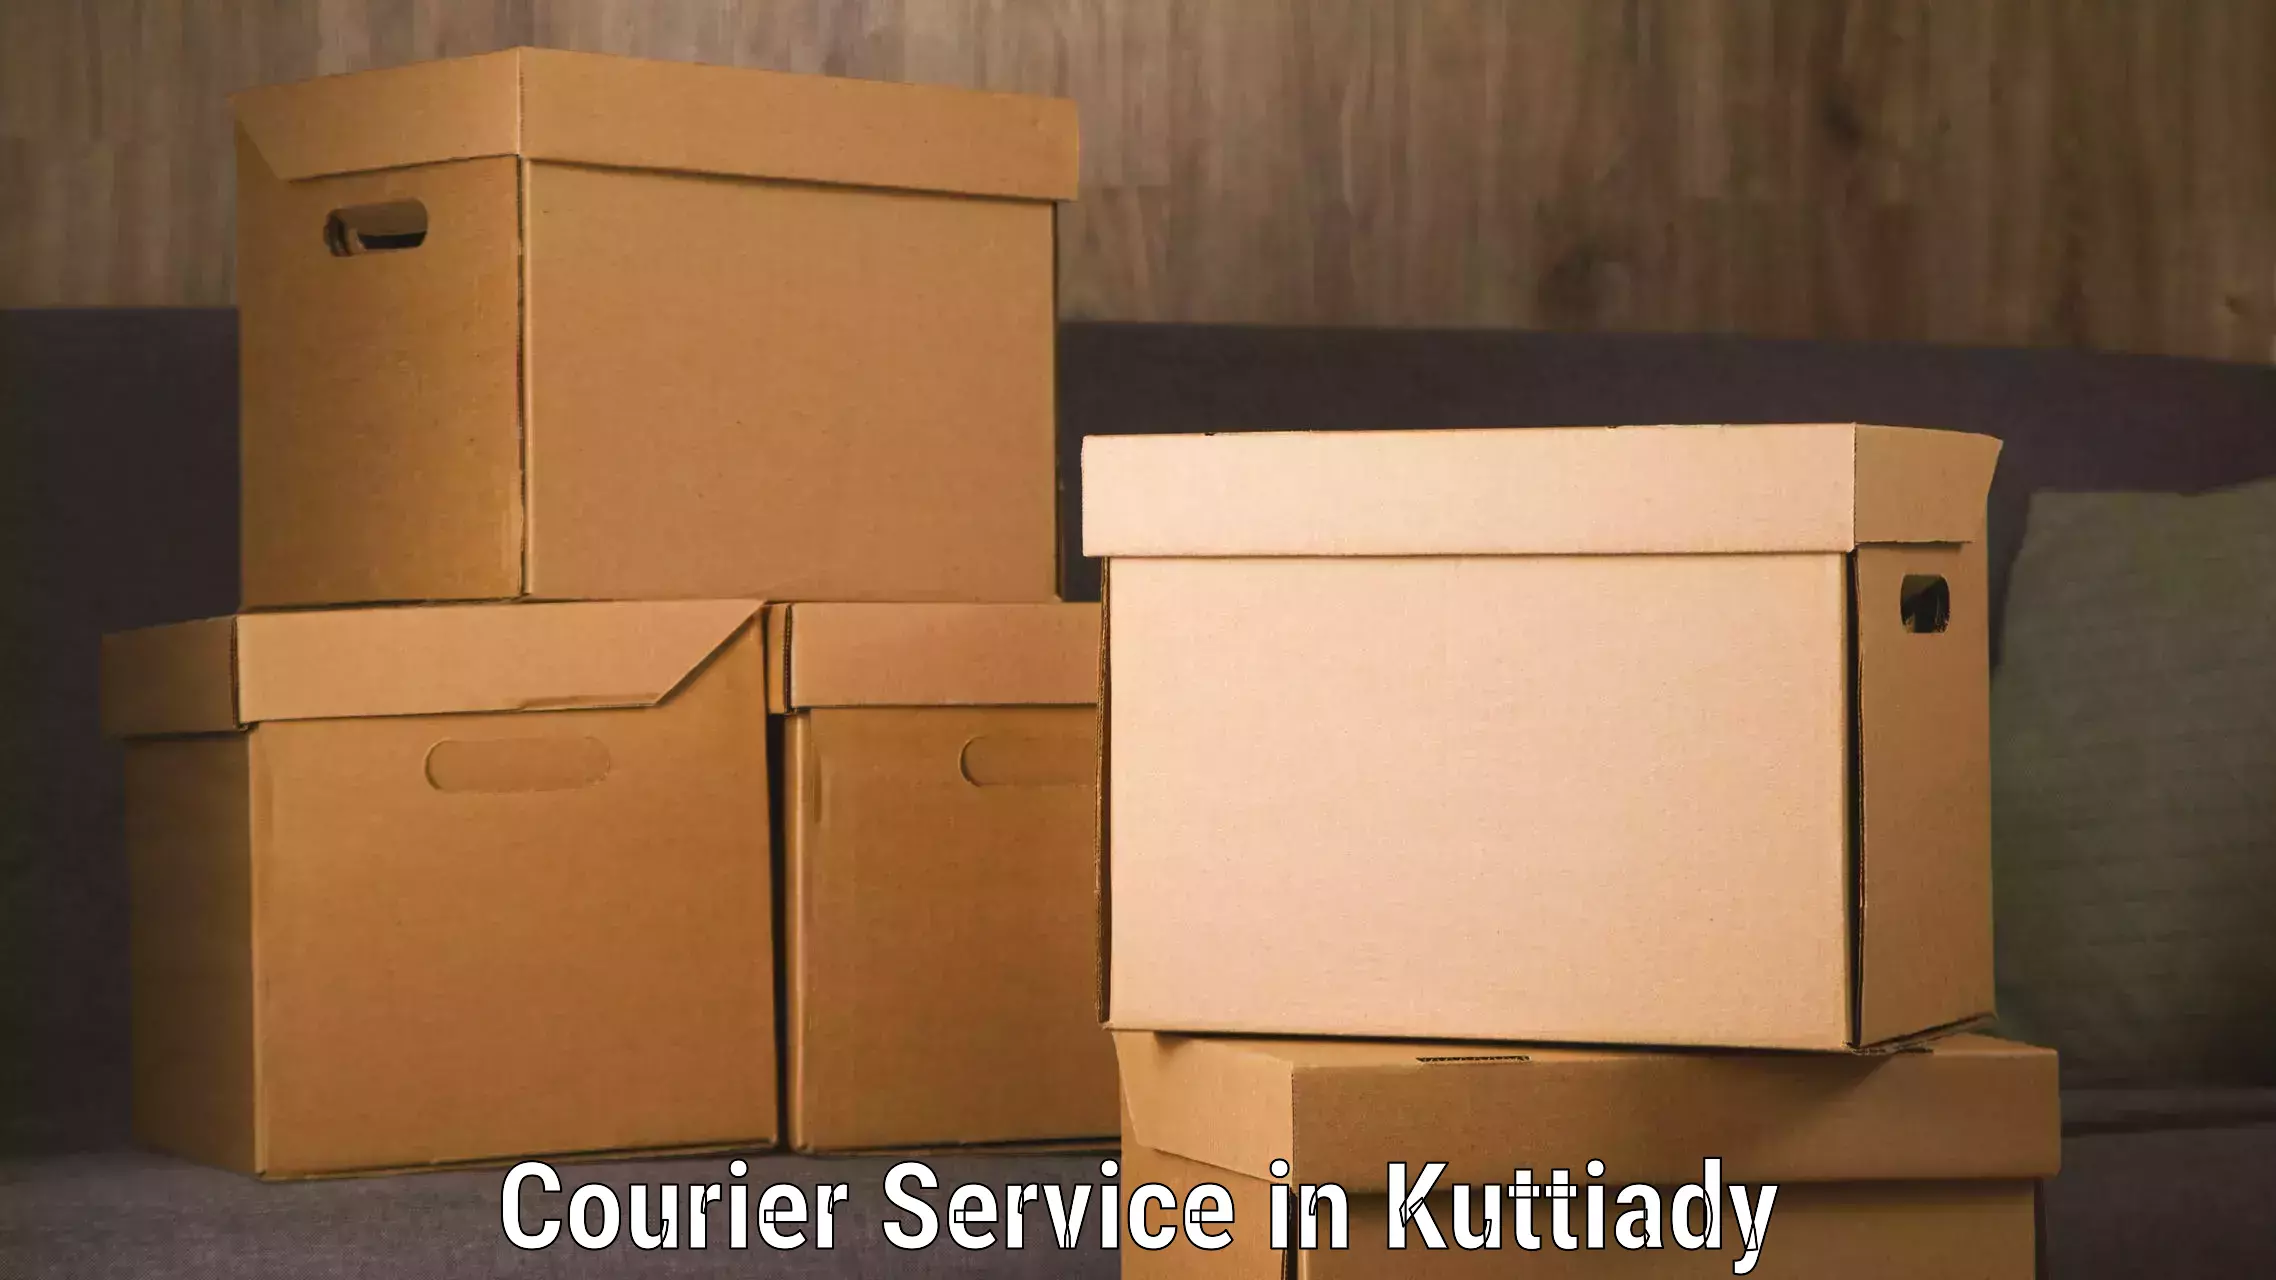 Efficient cargo handling in Kuttiady